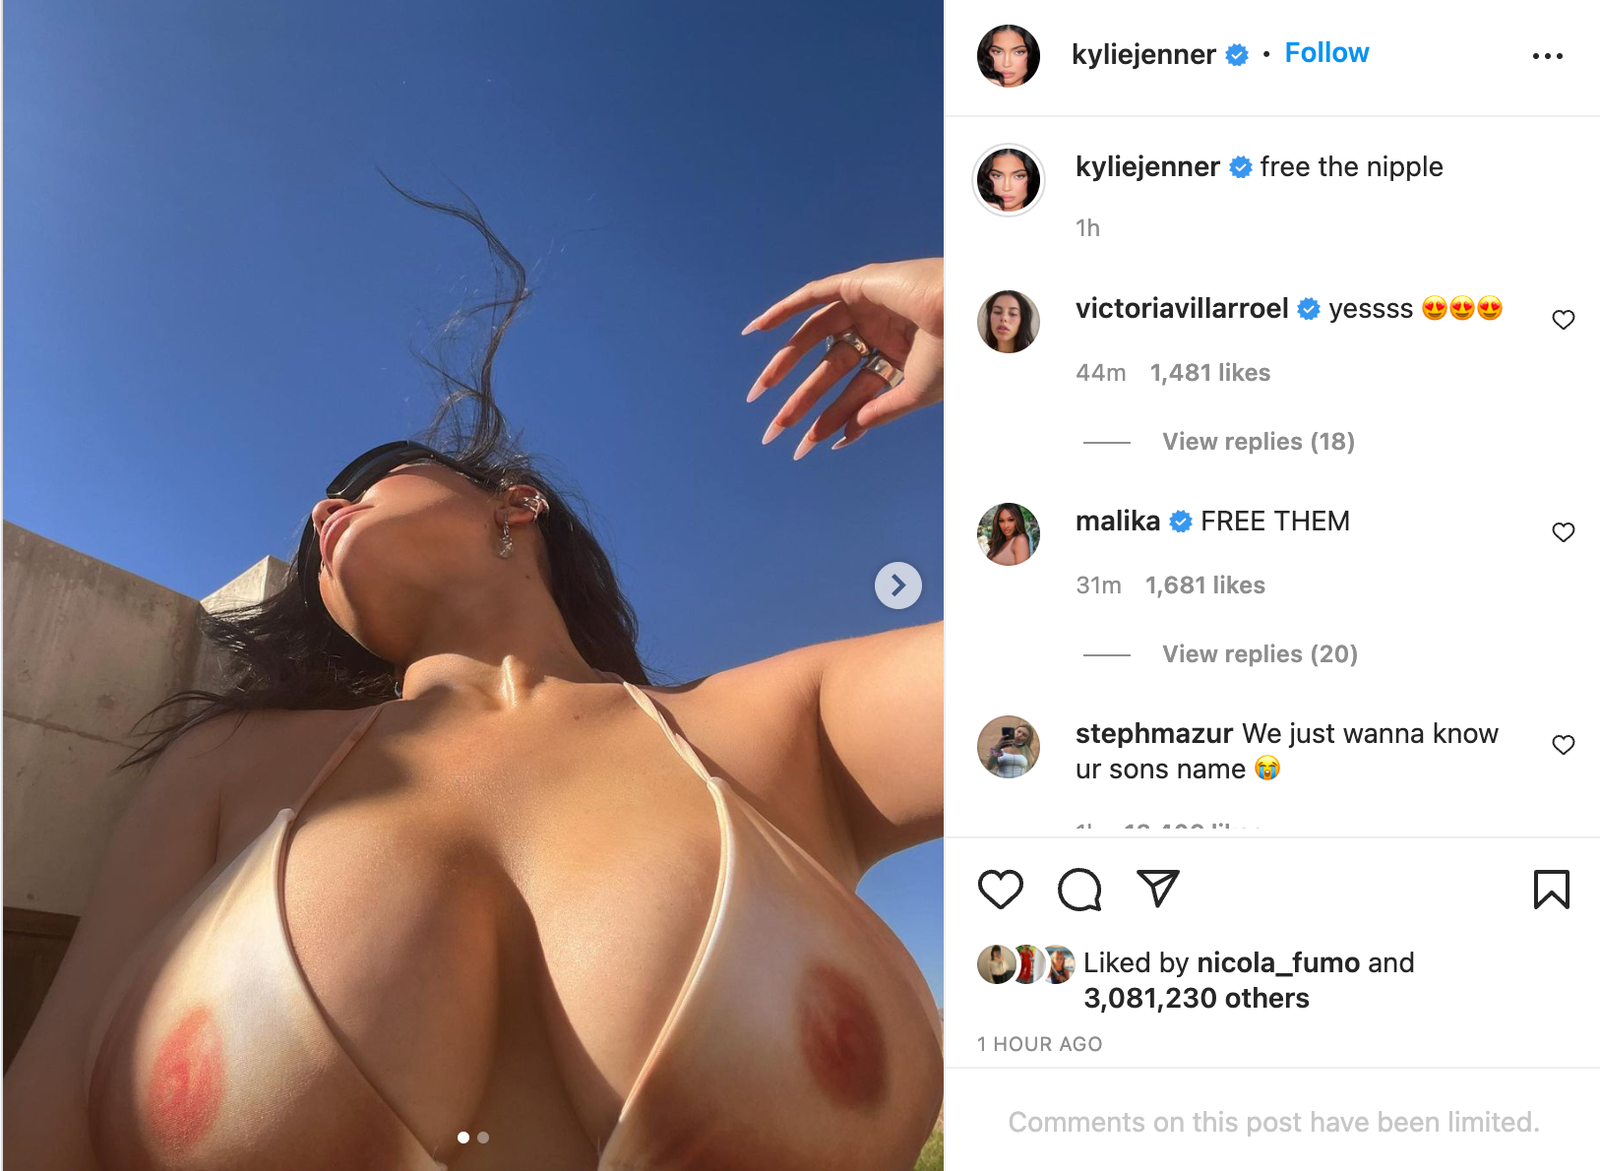 ashok kumar tripathy add kylie jenner nude breast photo